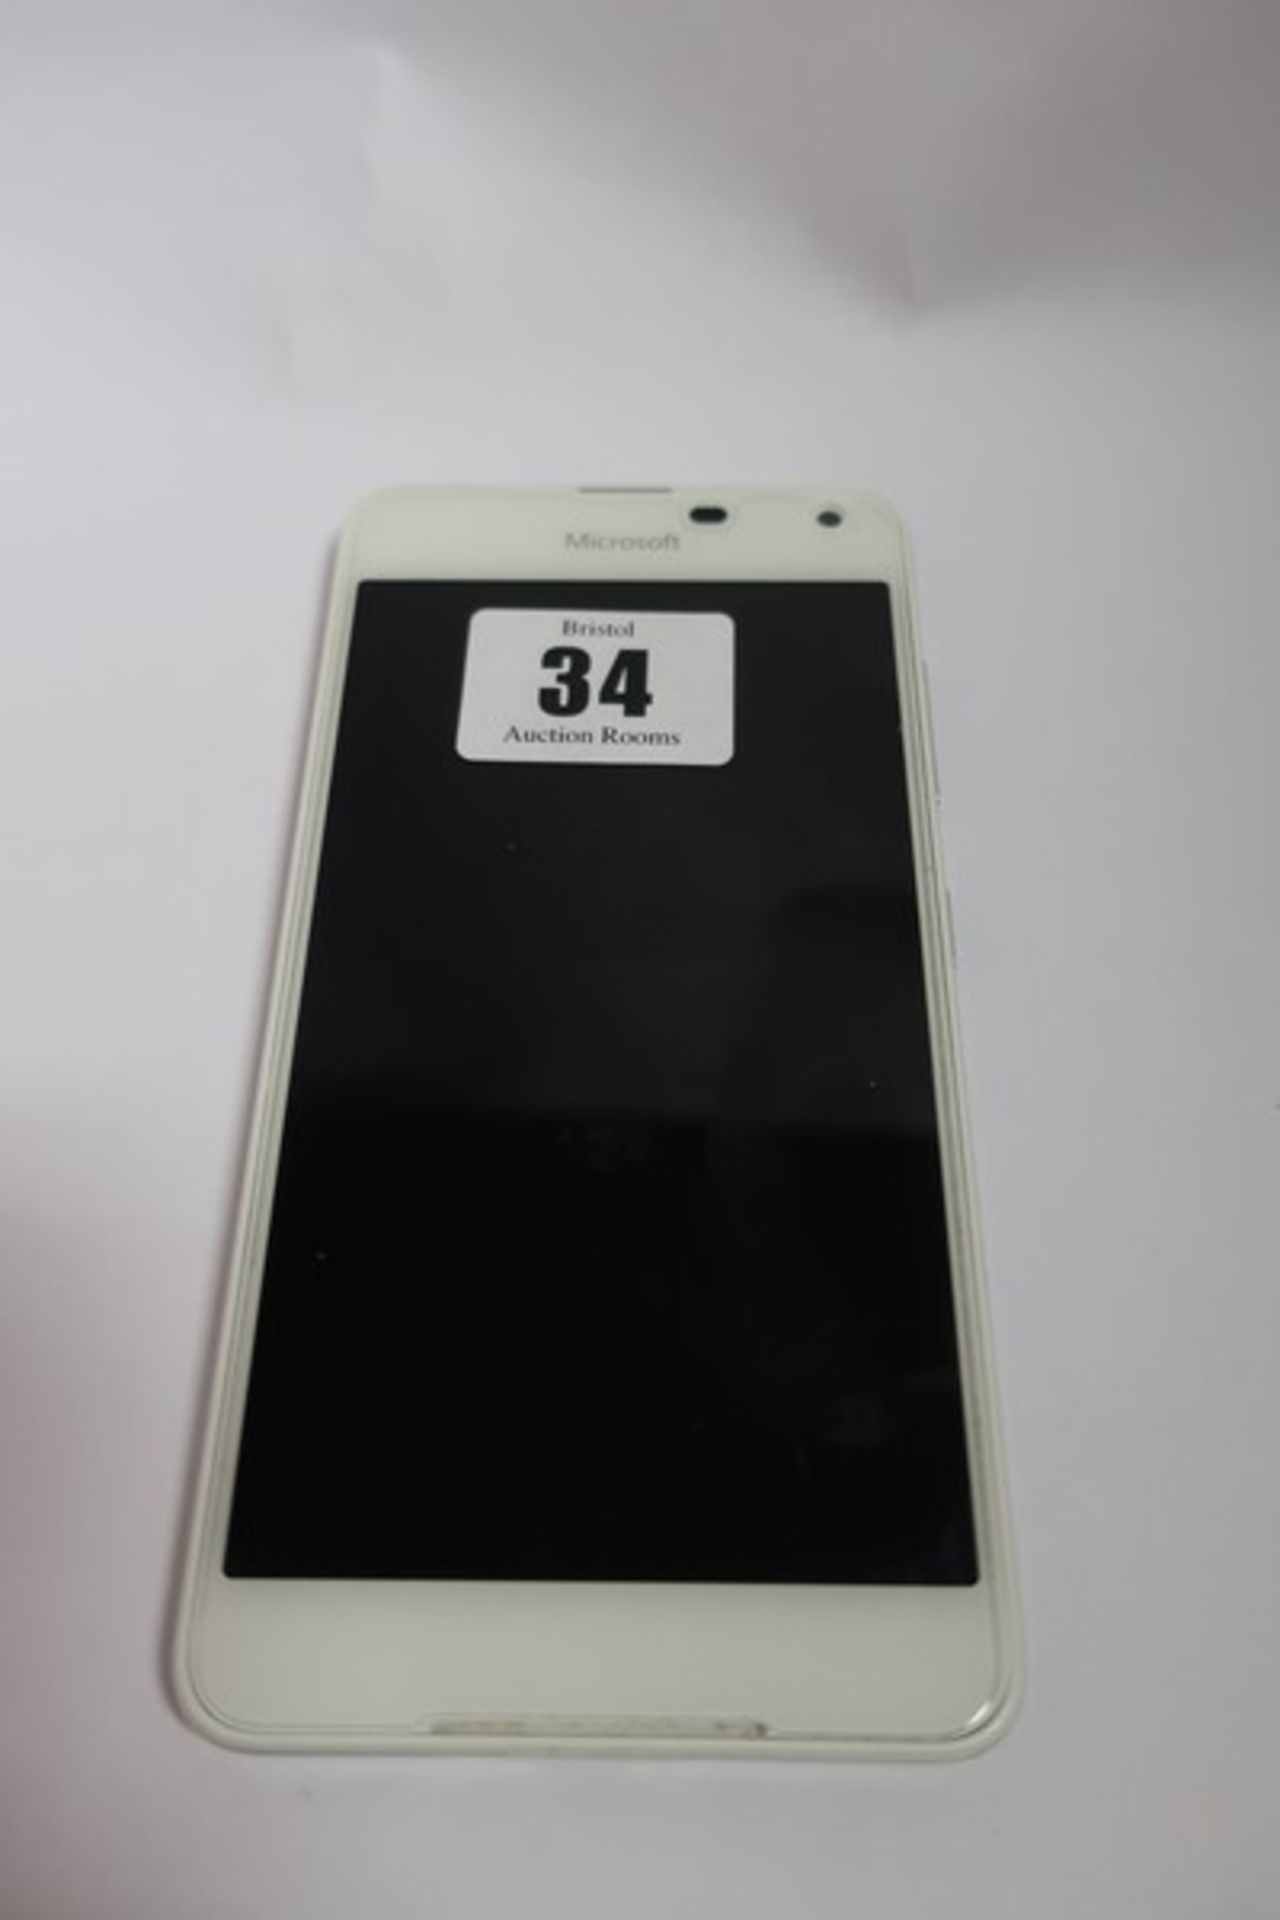 A Microsoft Lumia 650 16GB in White (IMEI: 355126079241265) (FRP clear).